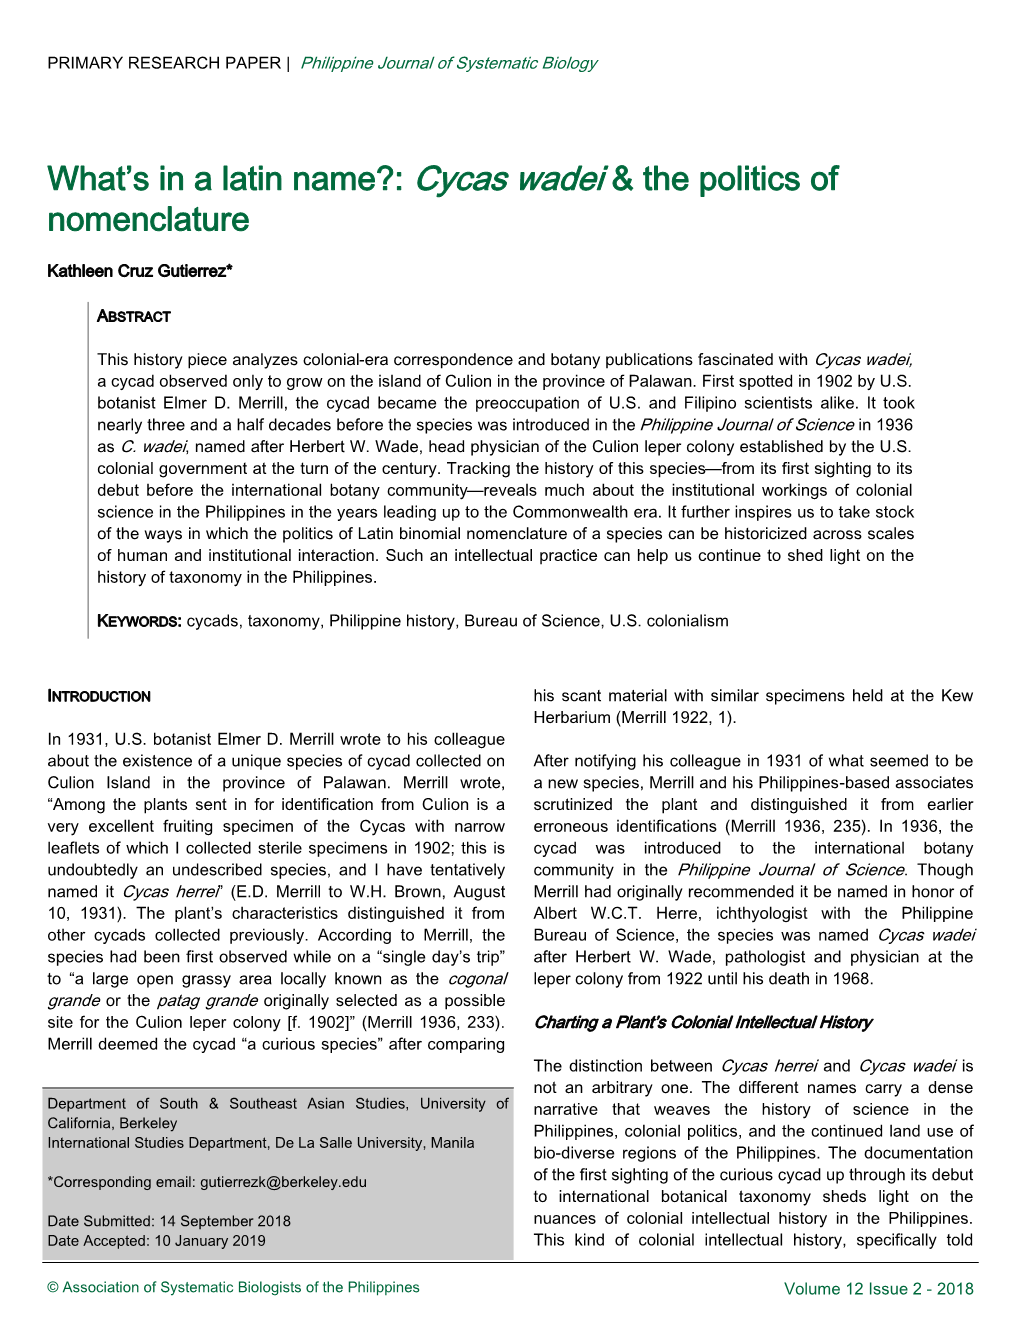 Cycas Wadei & the Politics of Nomenclature